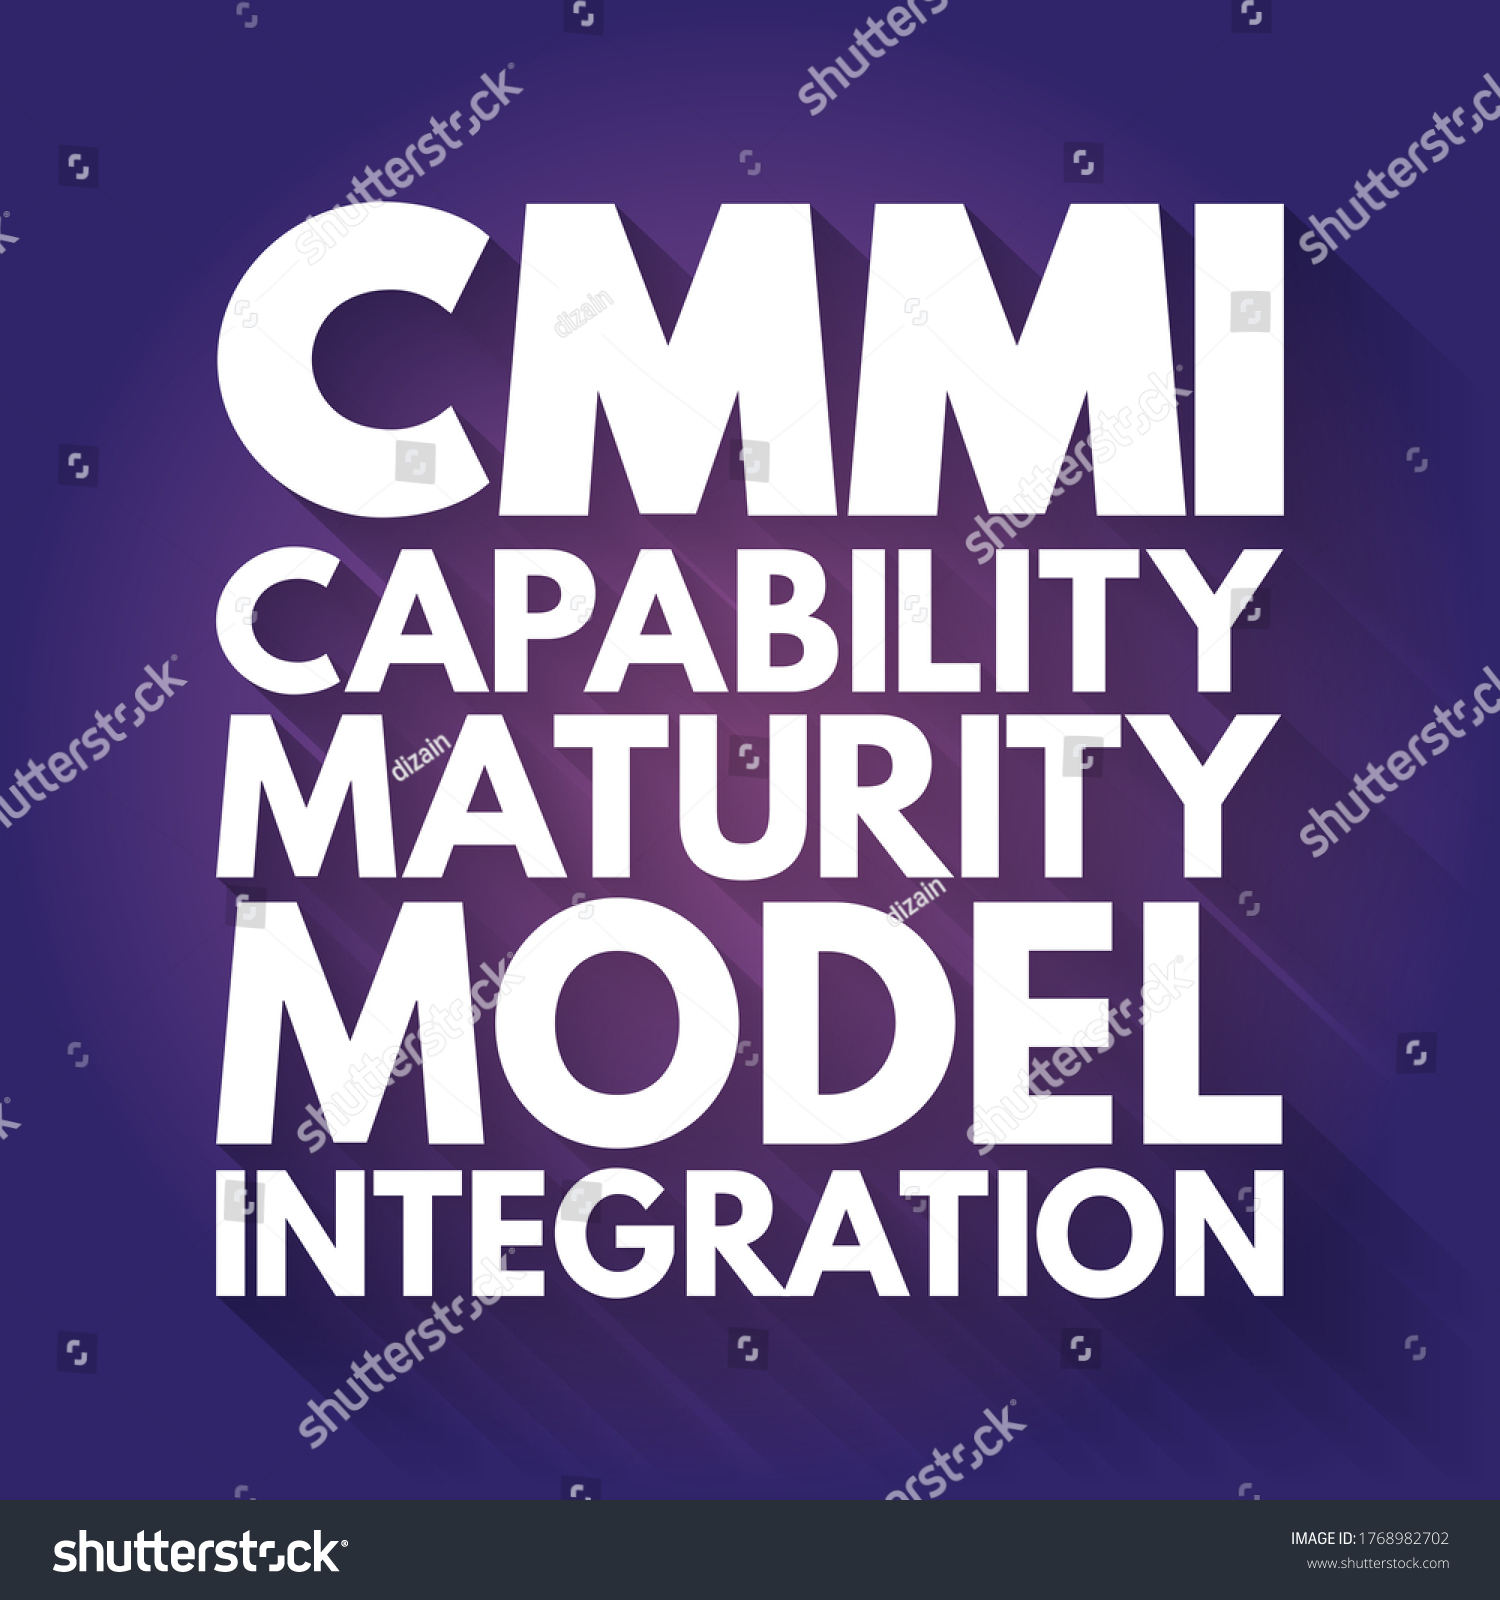 cmmi-capability-maturity-model-integration-royalty-free-stock